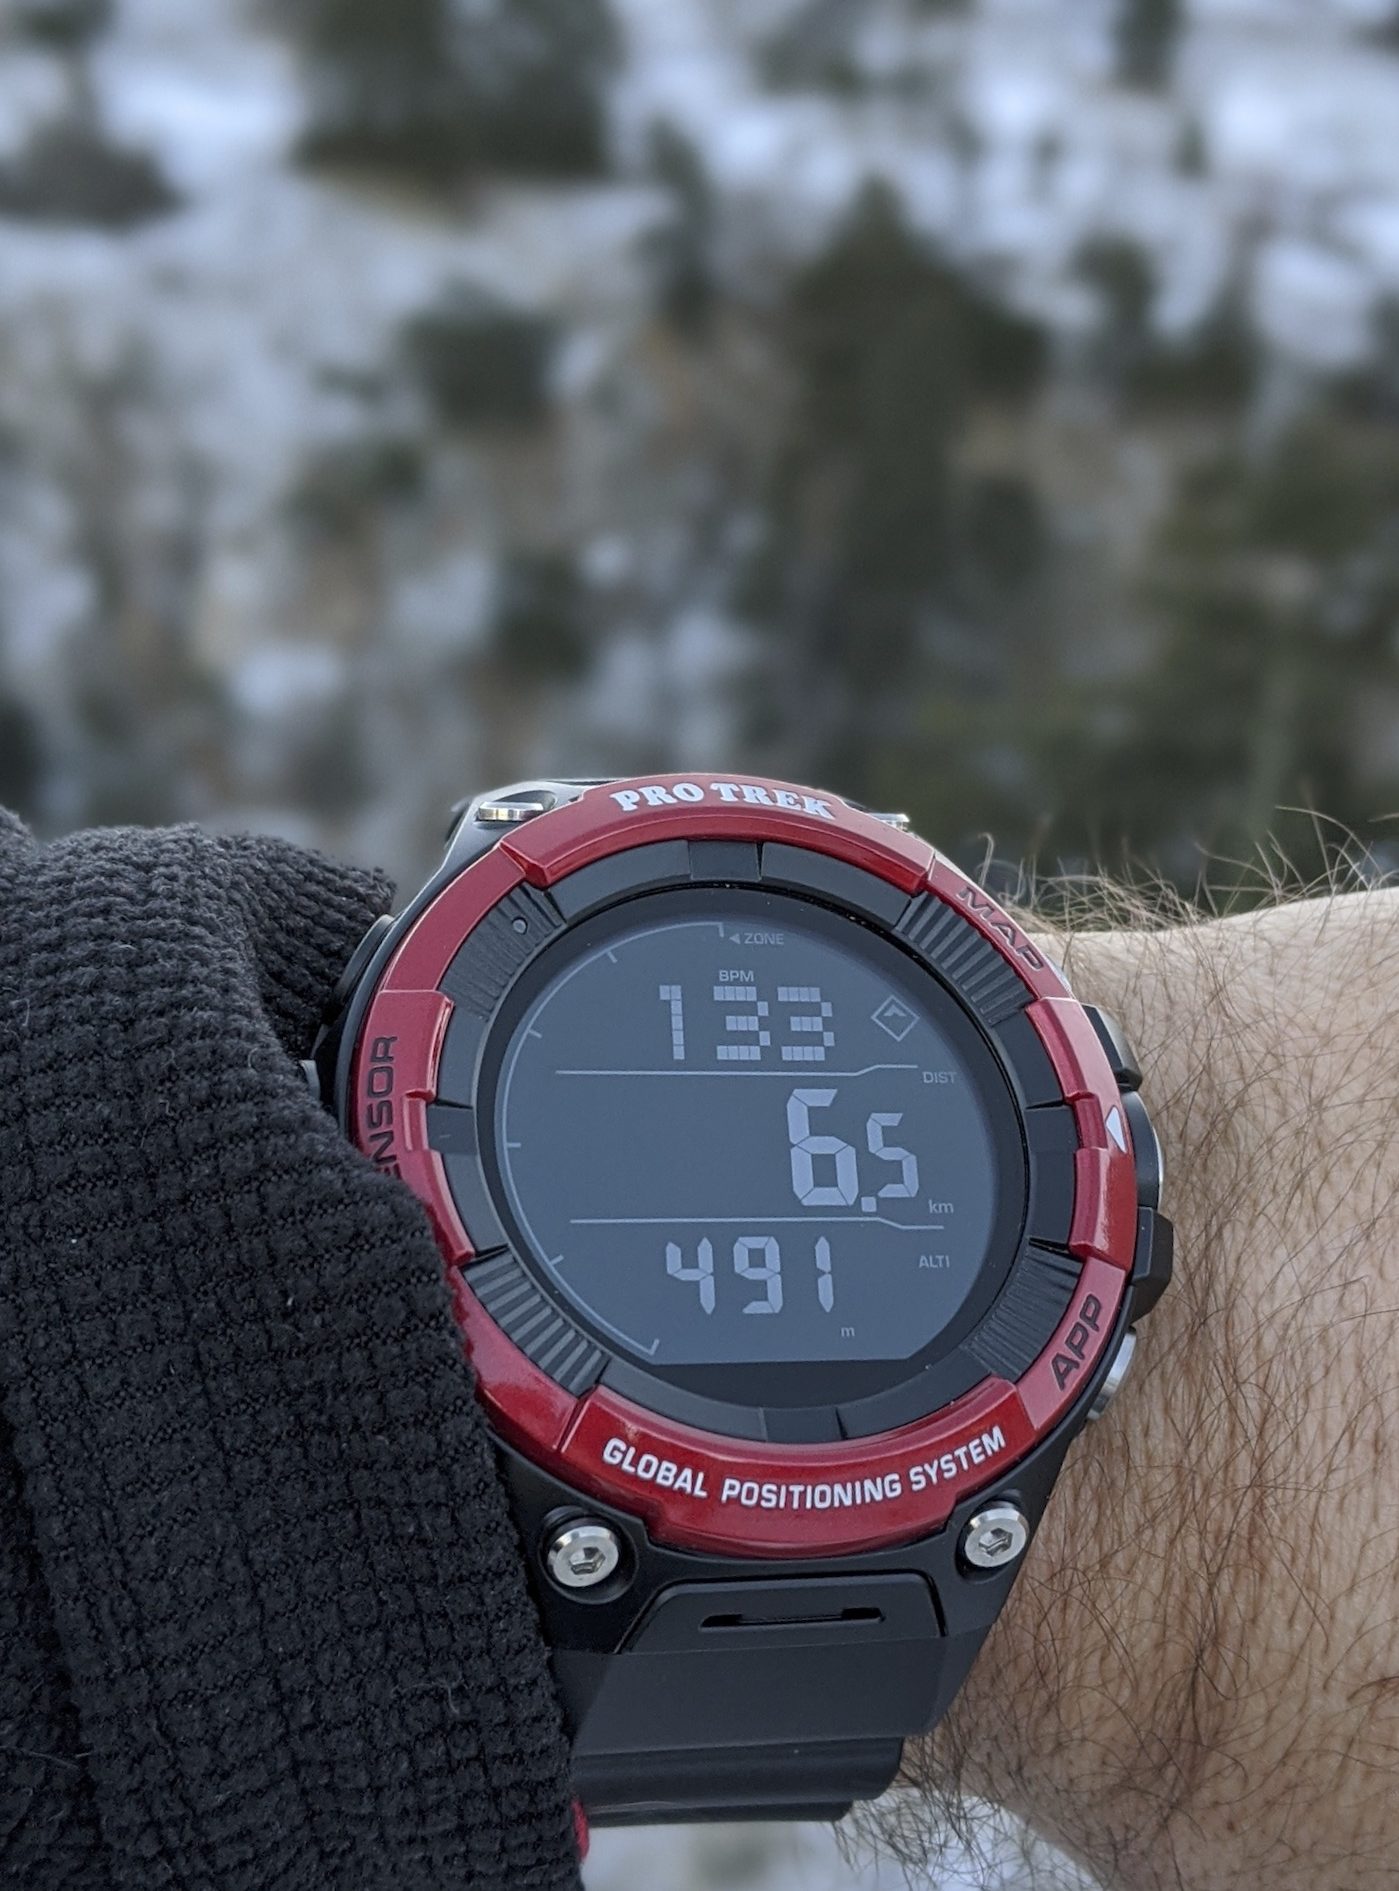 Casio Pro Trek WSD-F21 HR Watch Review | aBlogtoWatch